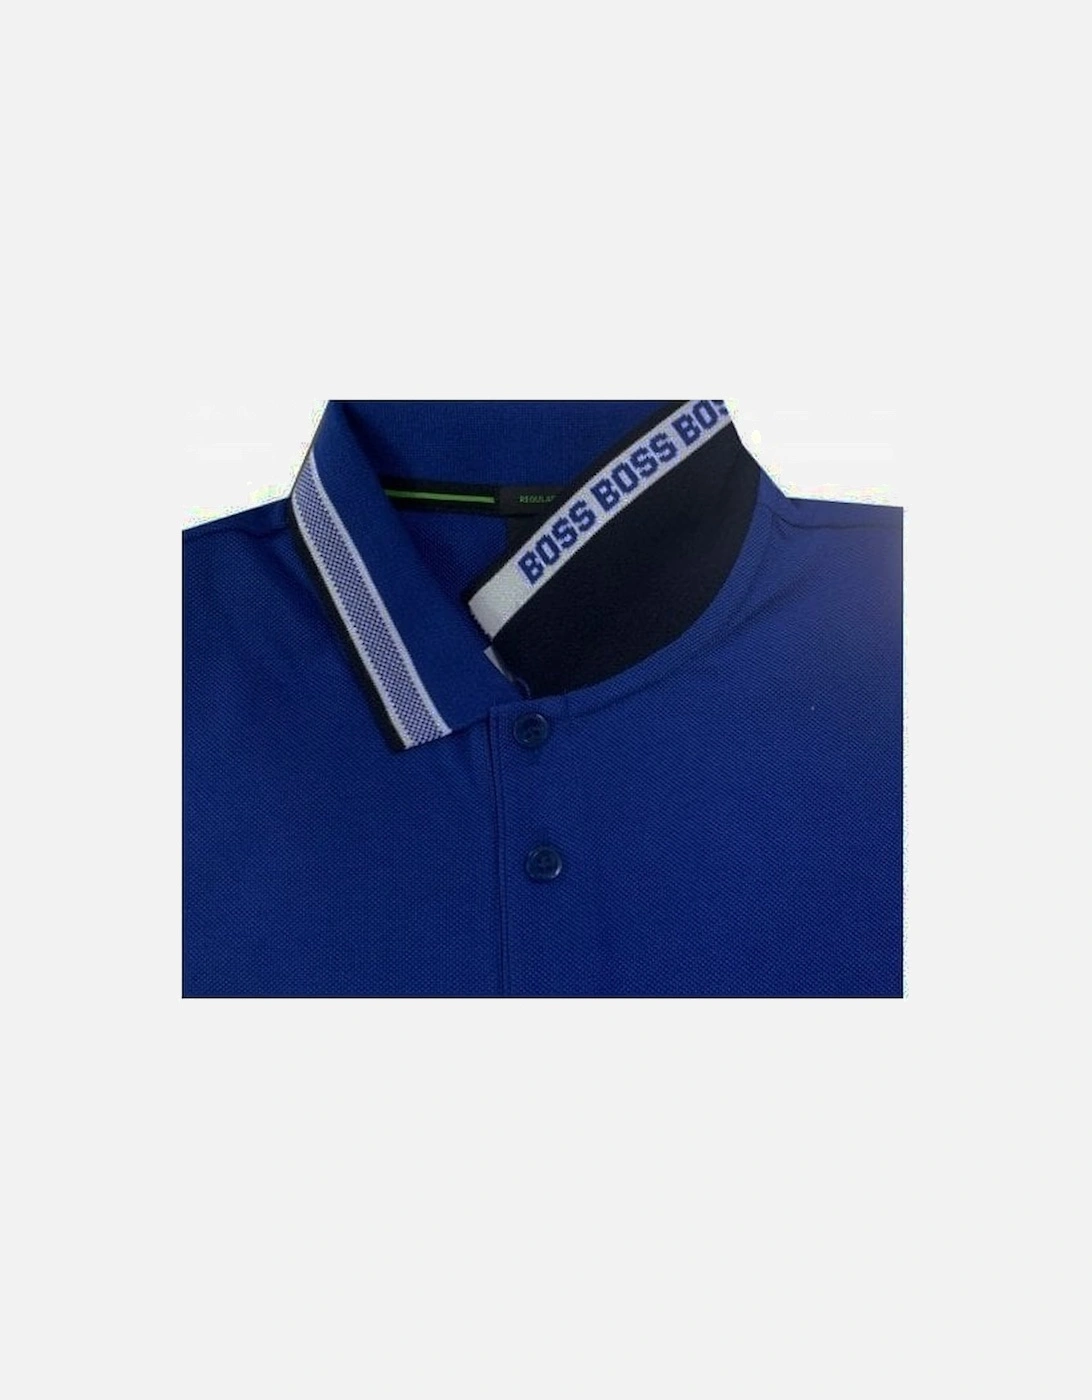 Men's Blue Paddy Polo Shirt